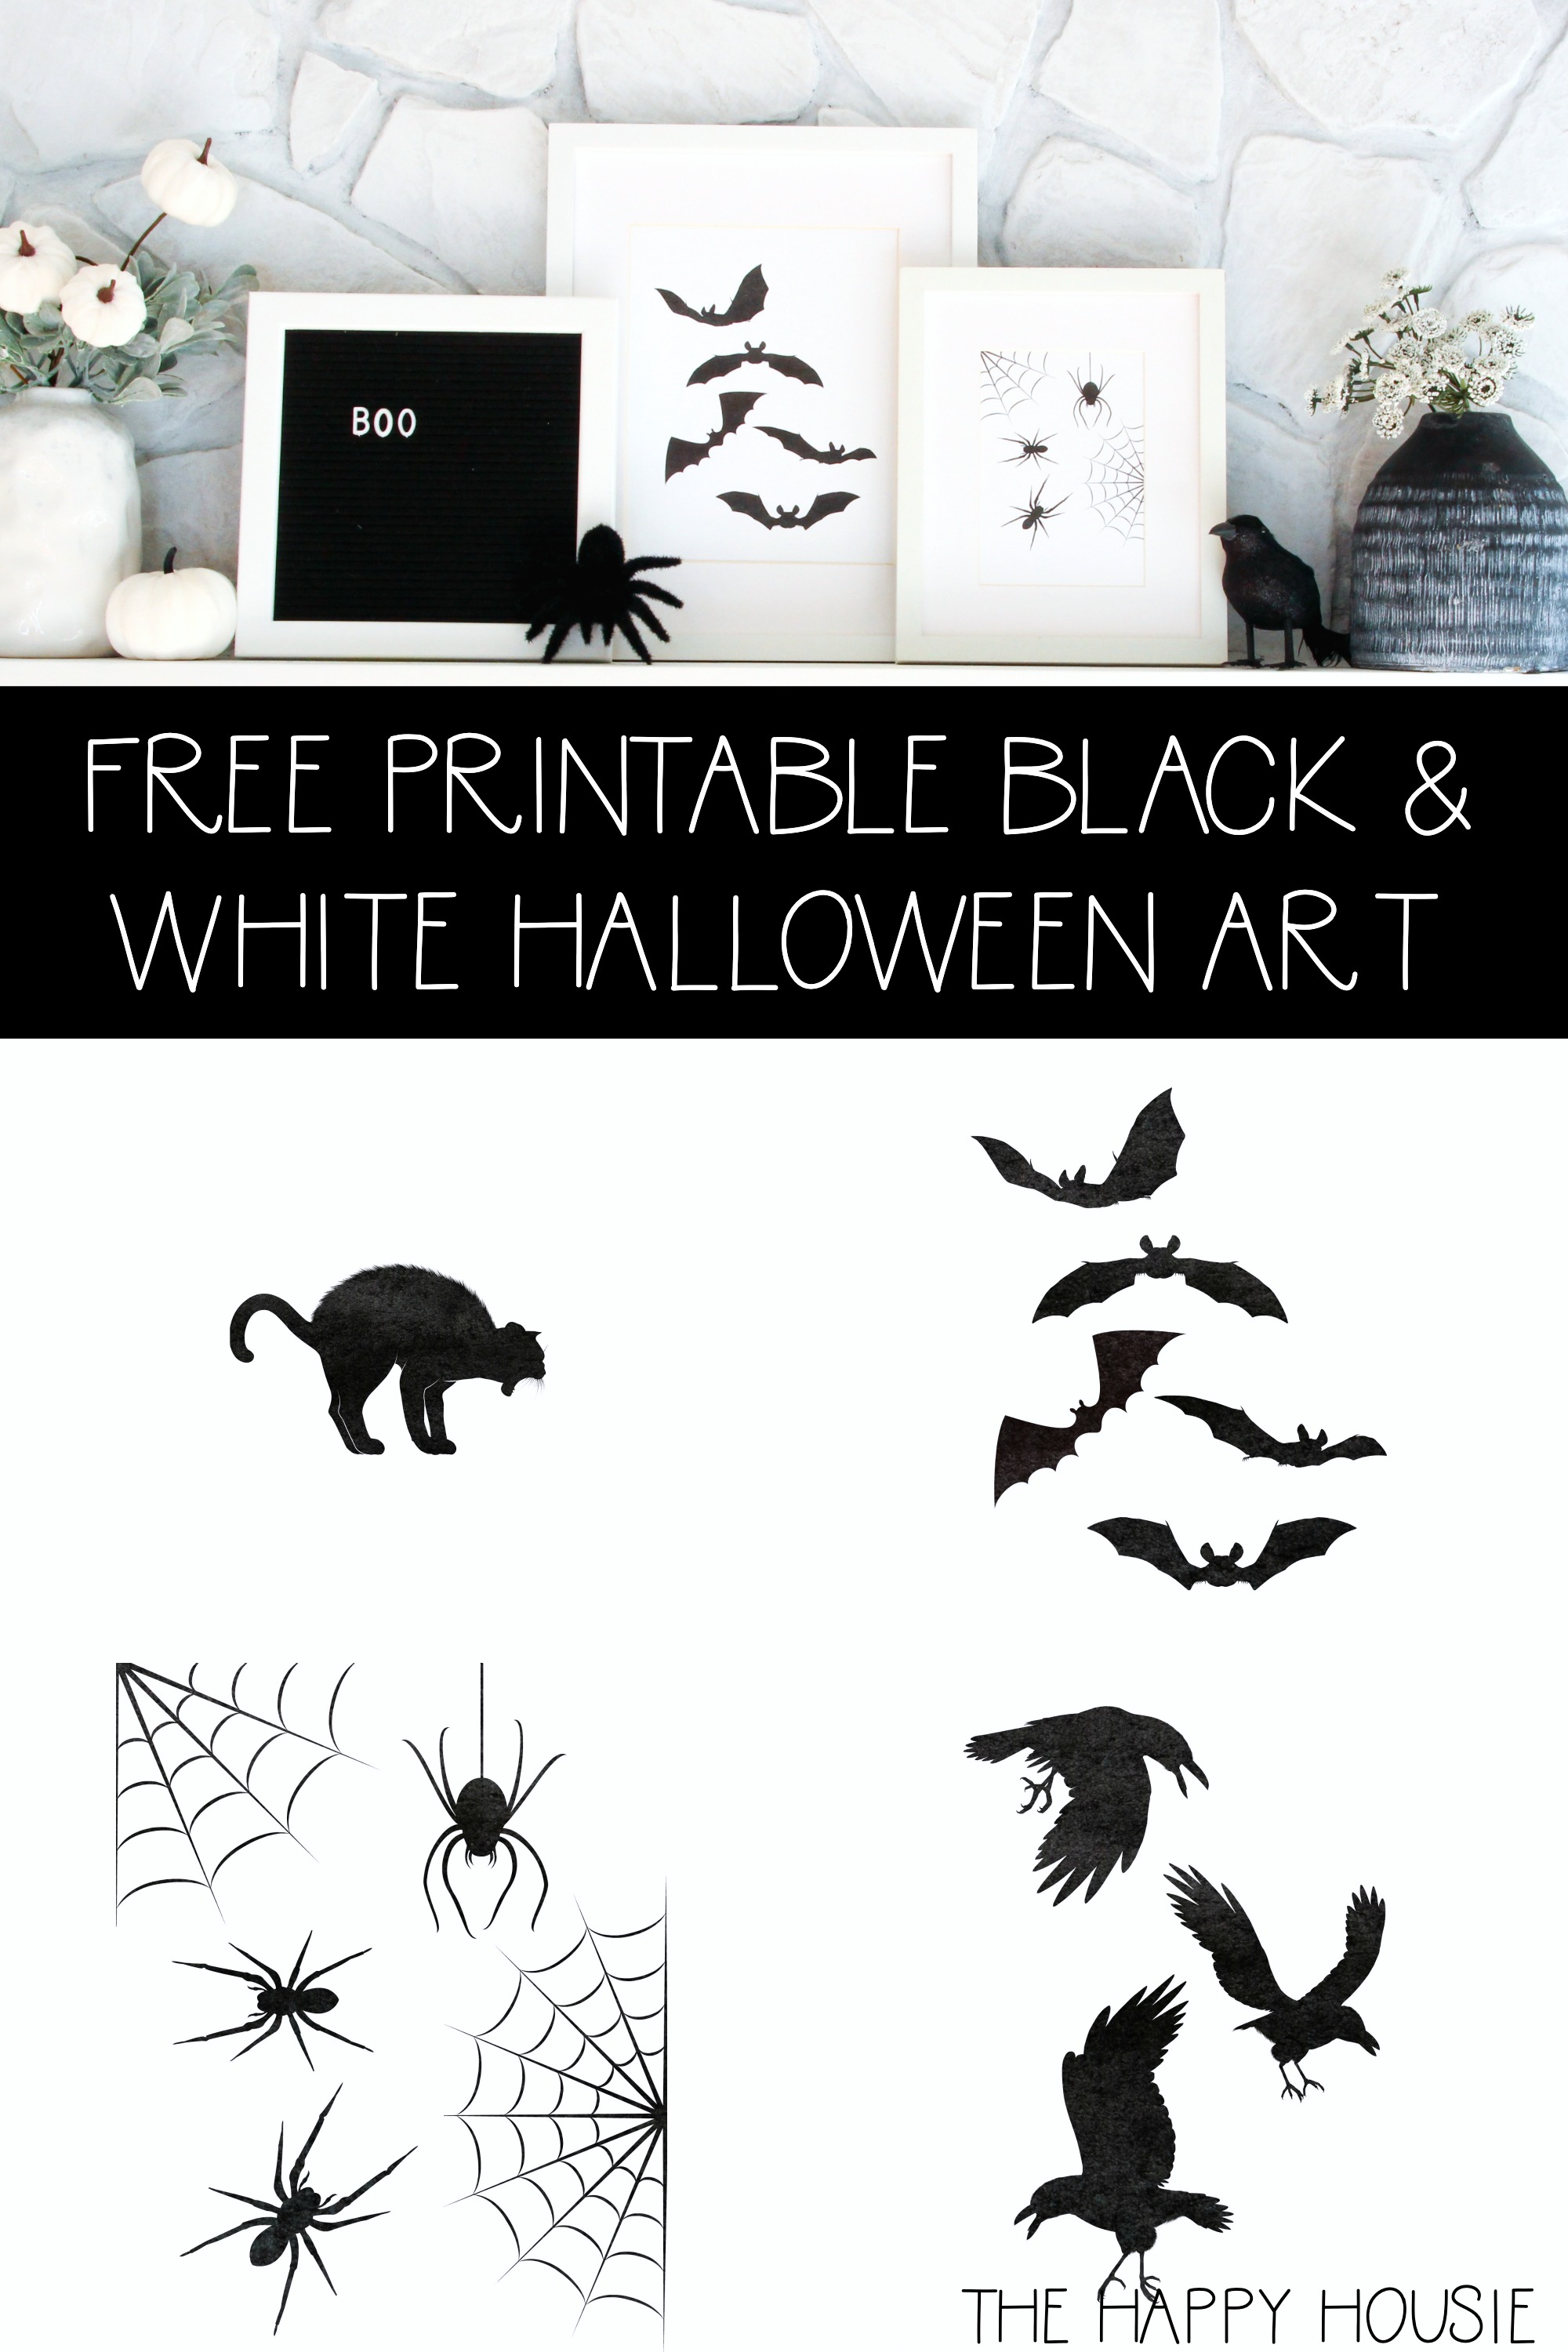 Free Printable Black & White Halloween Art graphic.